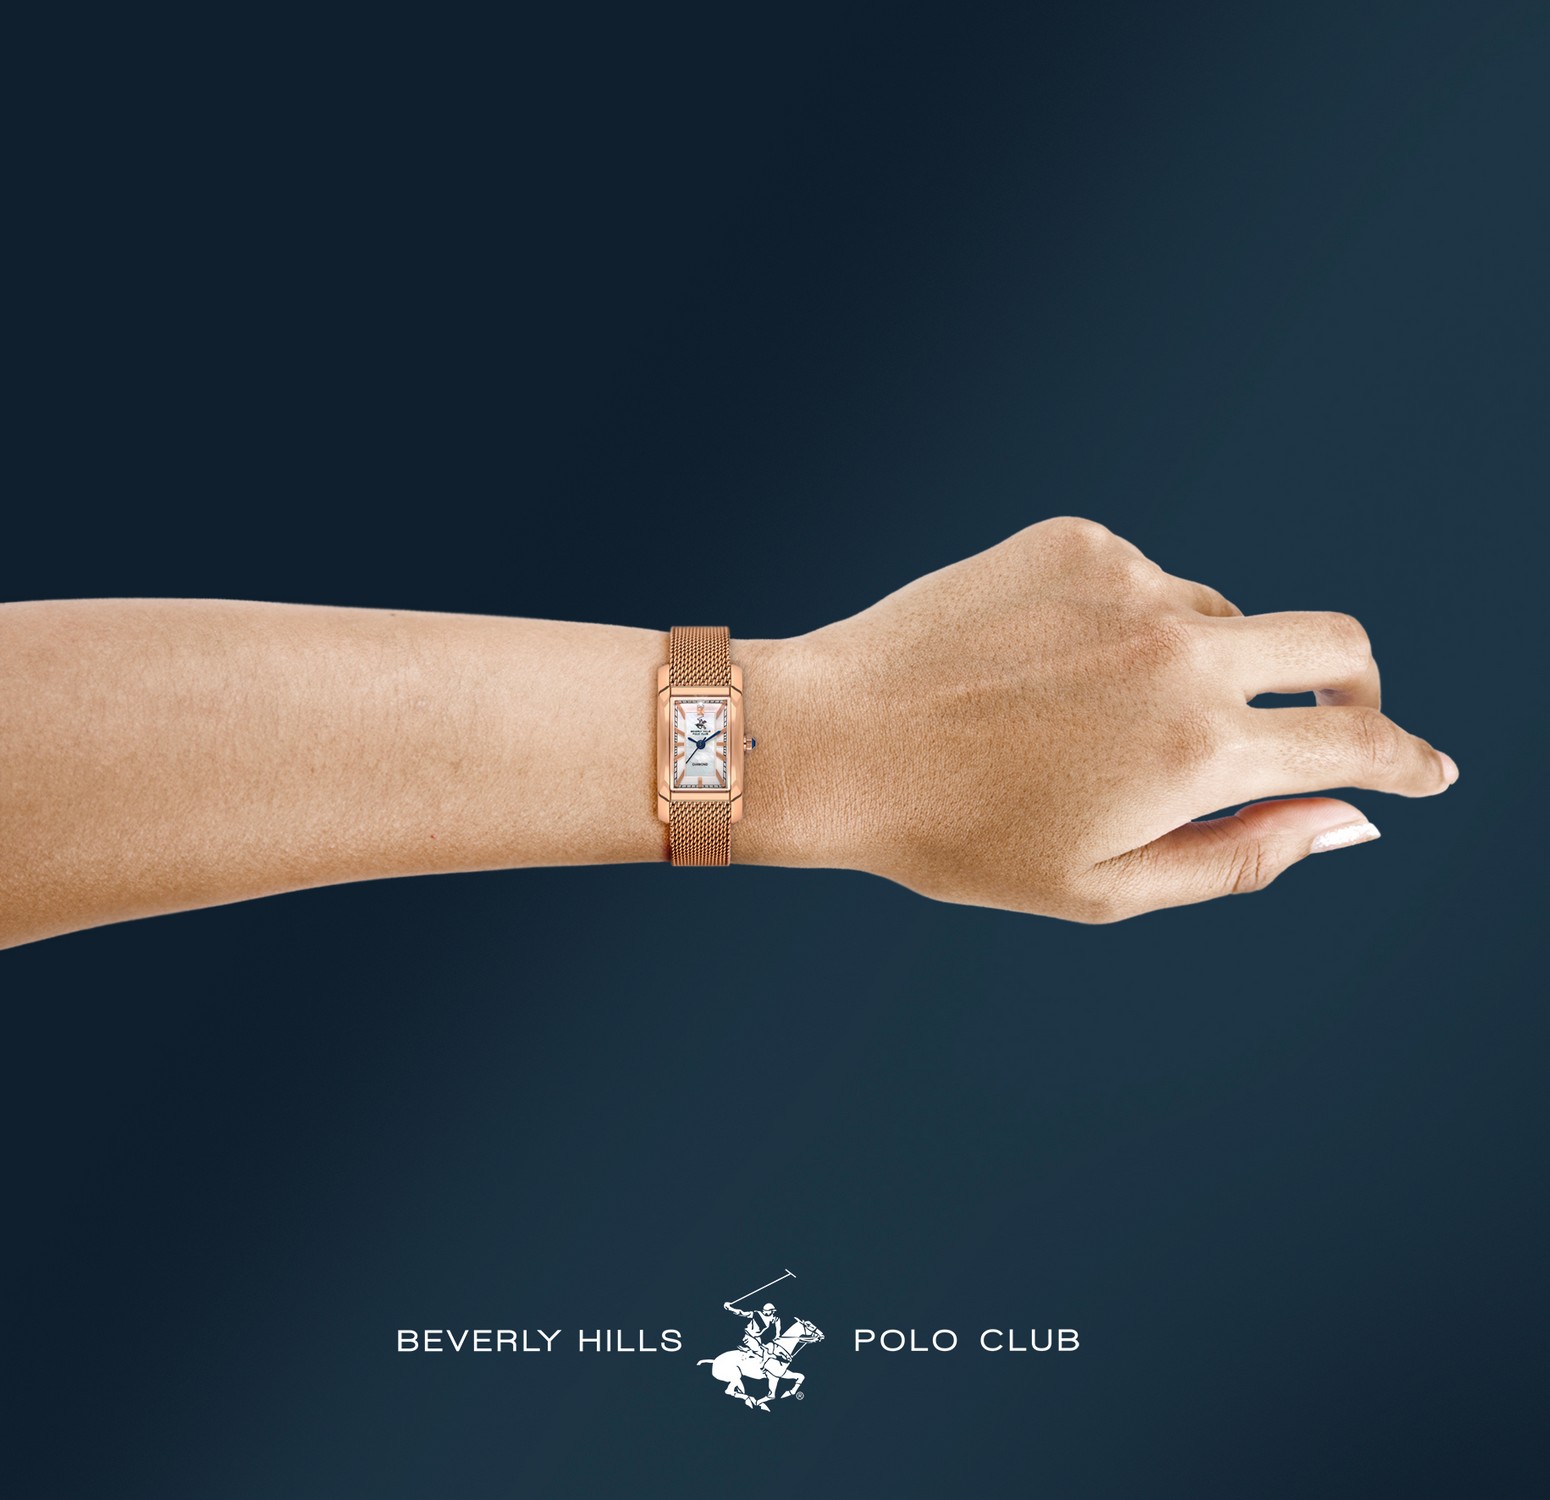 BEVERLY HILLS POLO CLUB  Женские часы, кварцевый механизм, суперметалл с покрытием, 21х37 мм